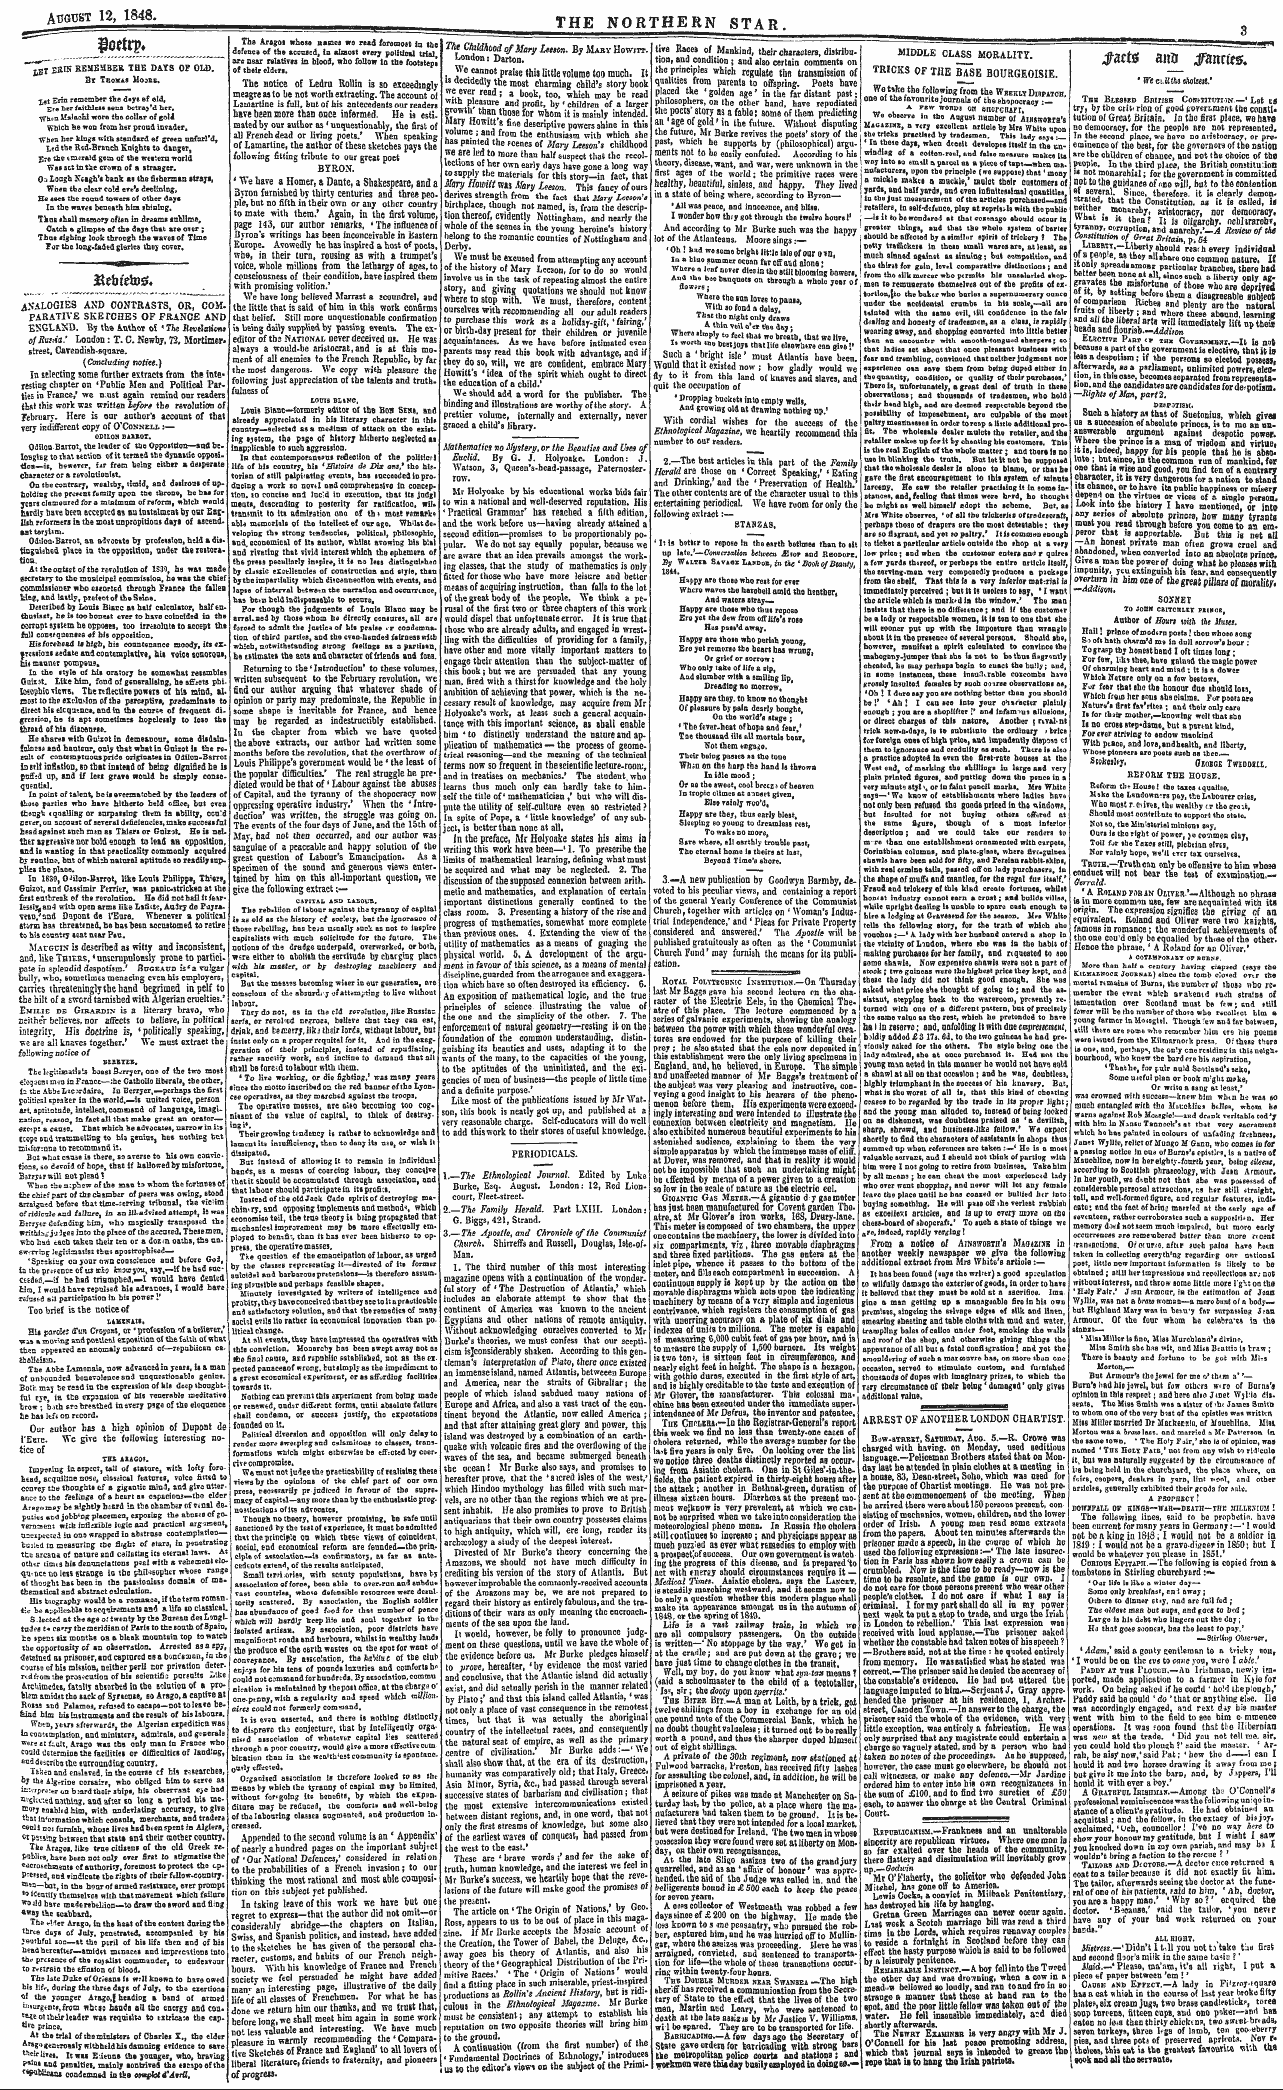 Northern Star (1837-1852): jS F Y, 3rd edition - R_Pub_-Ca_Sm.—Frankness And An Unalterab...